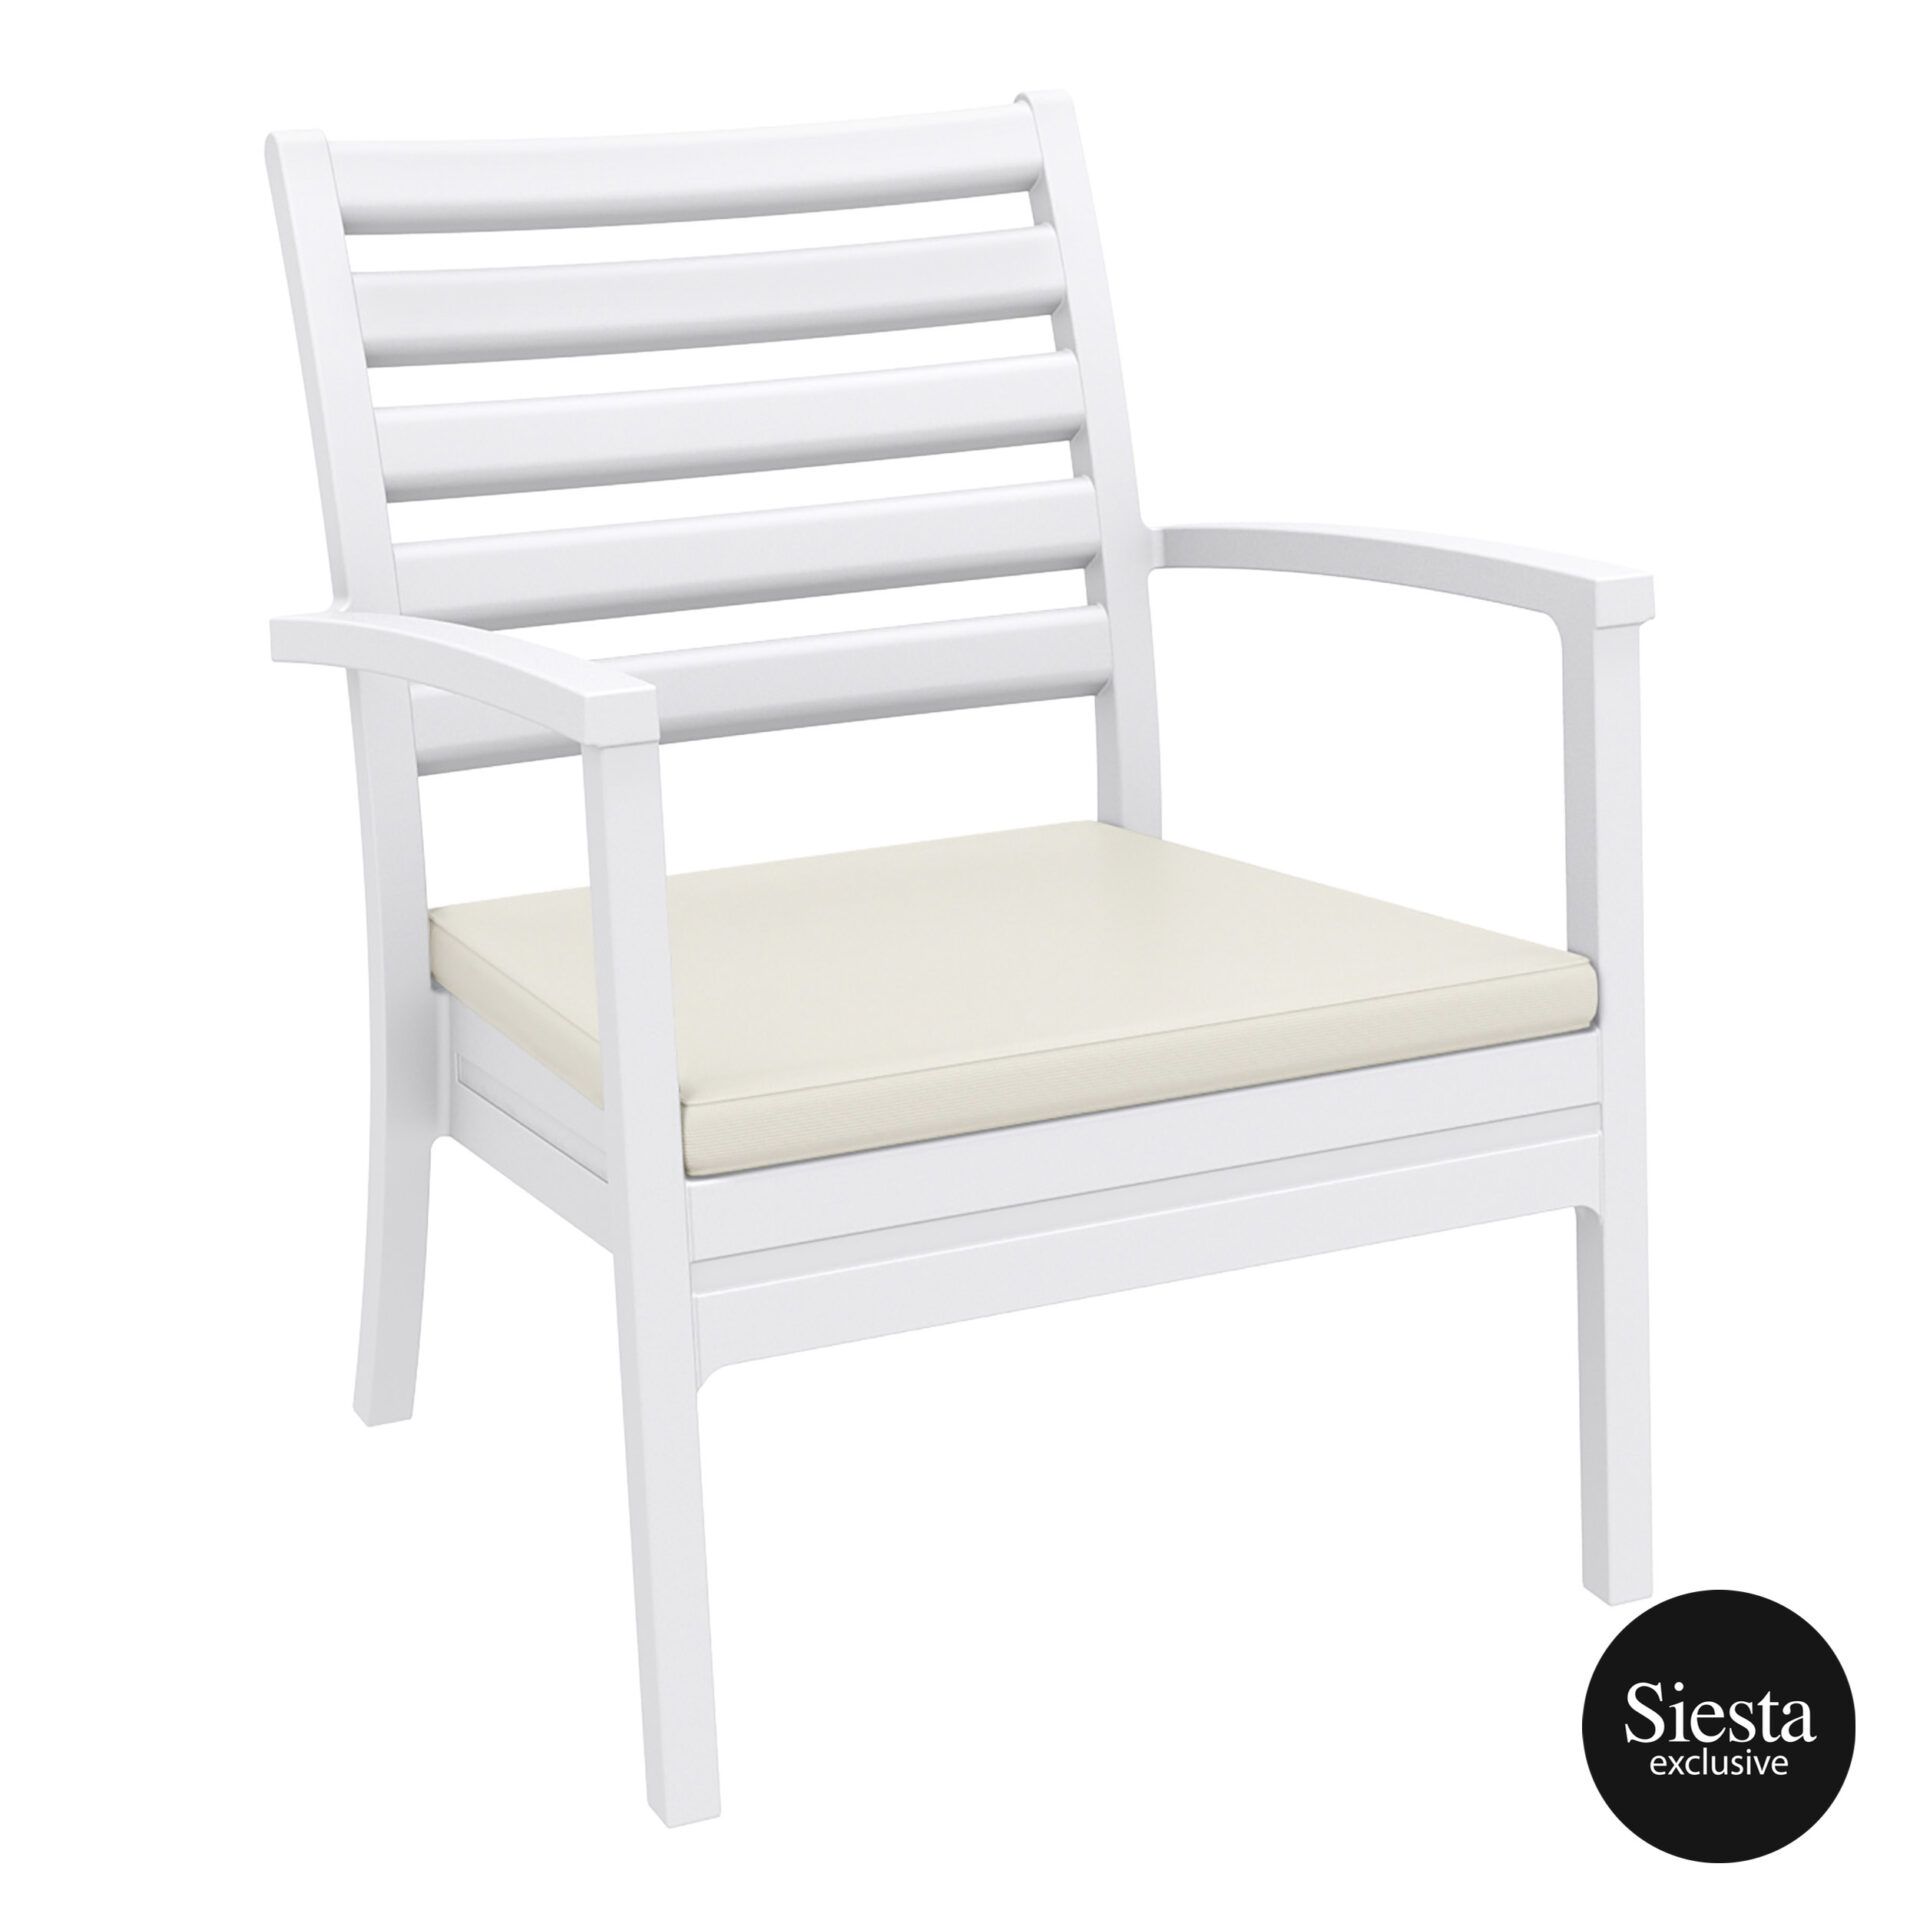 Artemis XL Armchair - White with Beige Seat Cushion